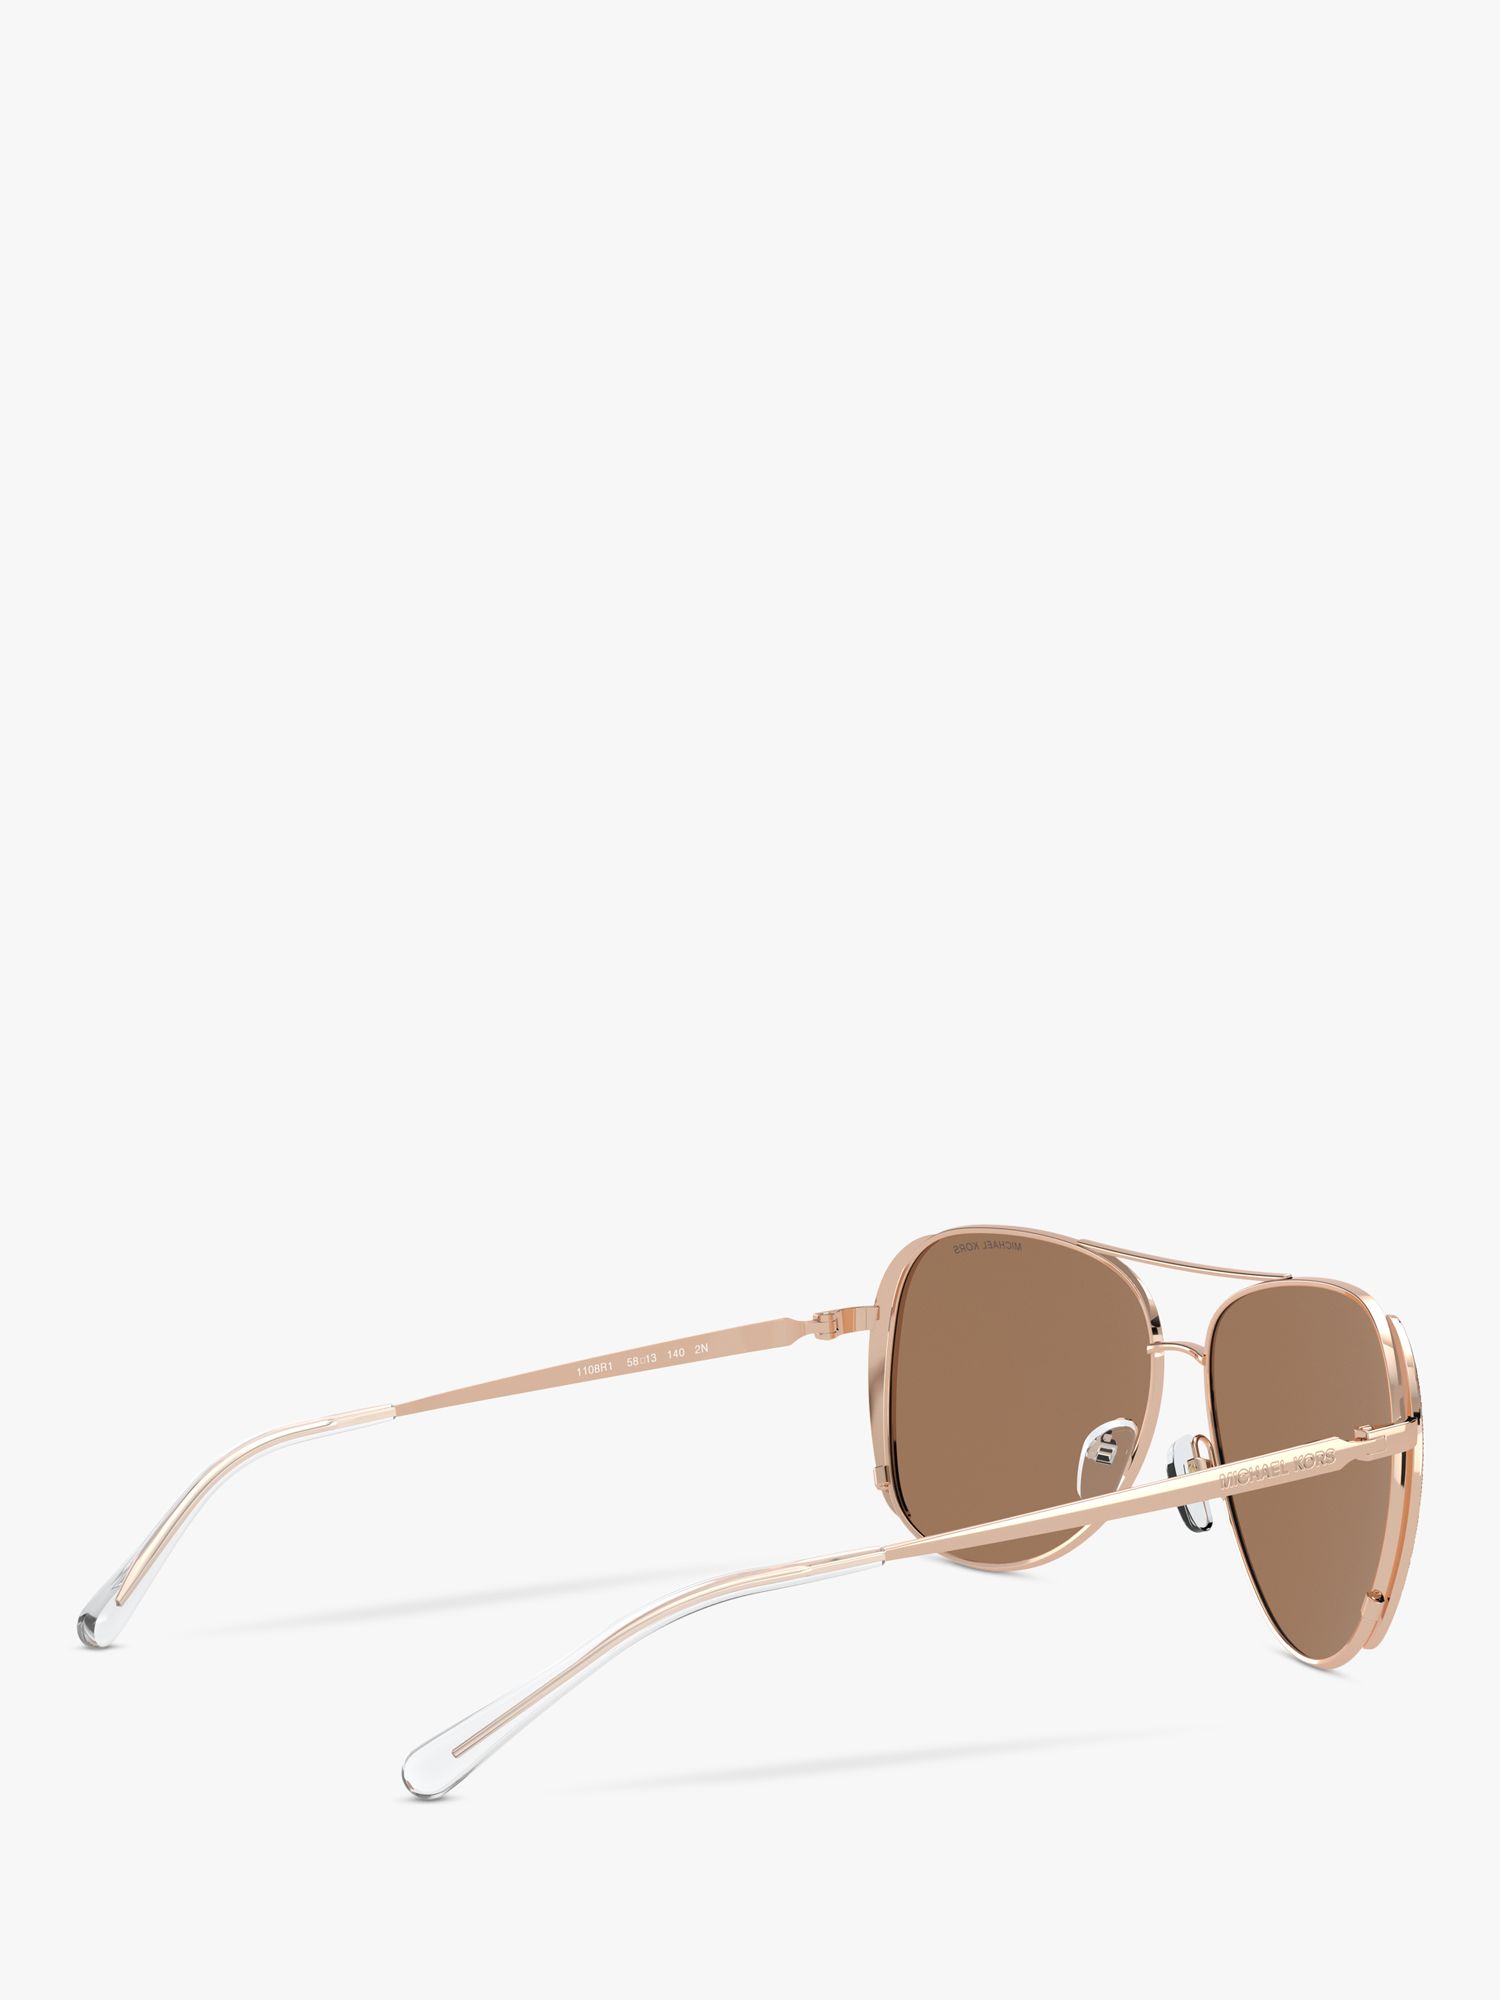 Michael Kors Sunglasses MK1082 Chelsea Glam 10618G - Best Price and  Available as Prescription Sunglasses